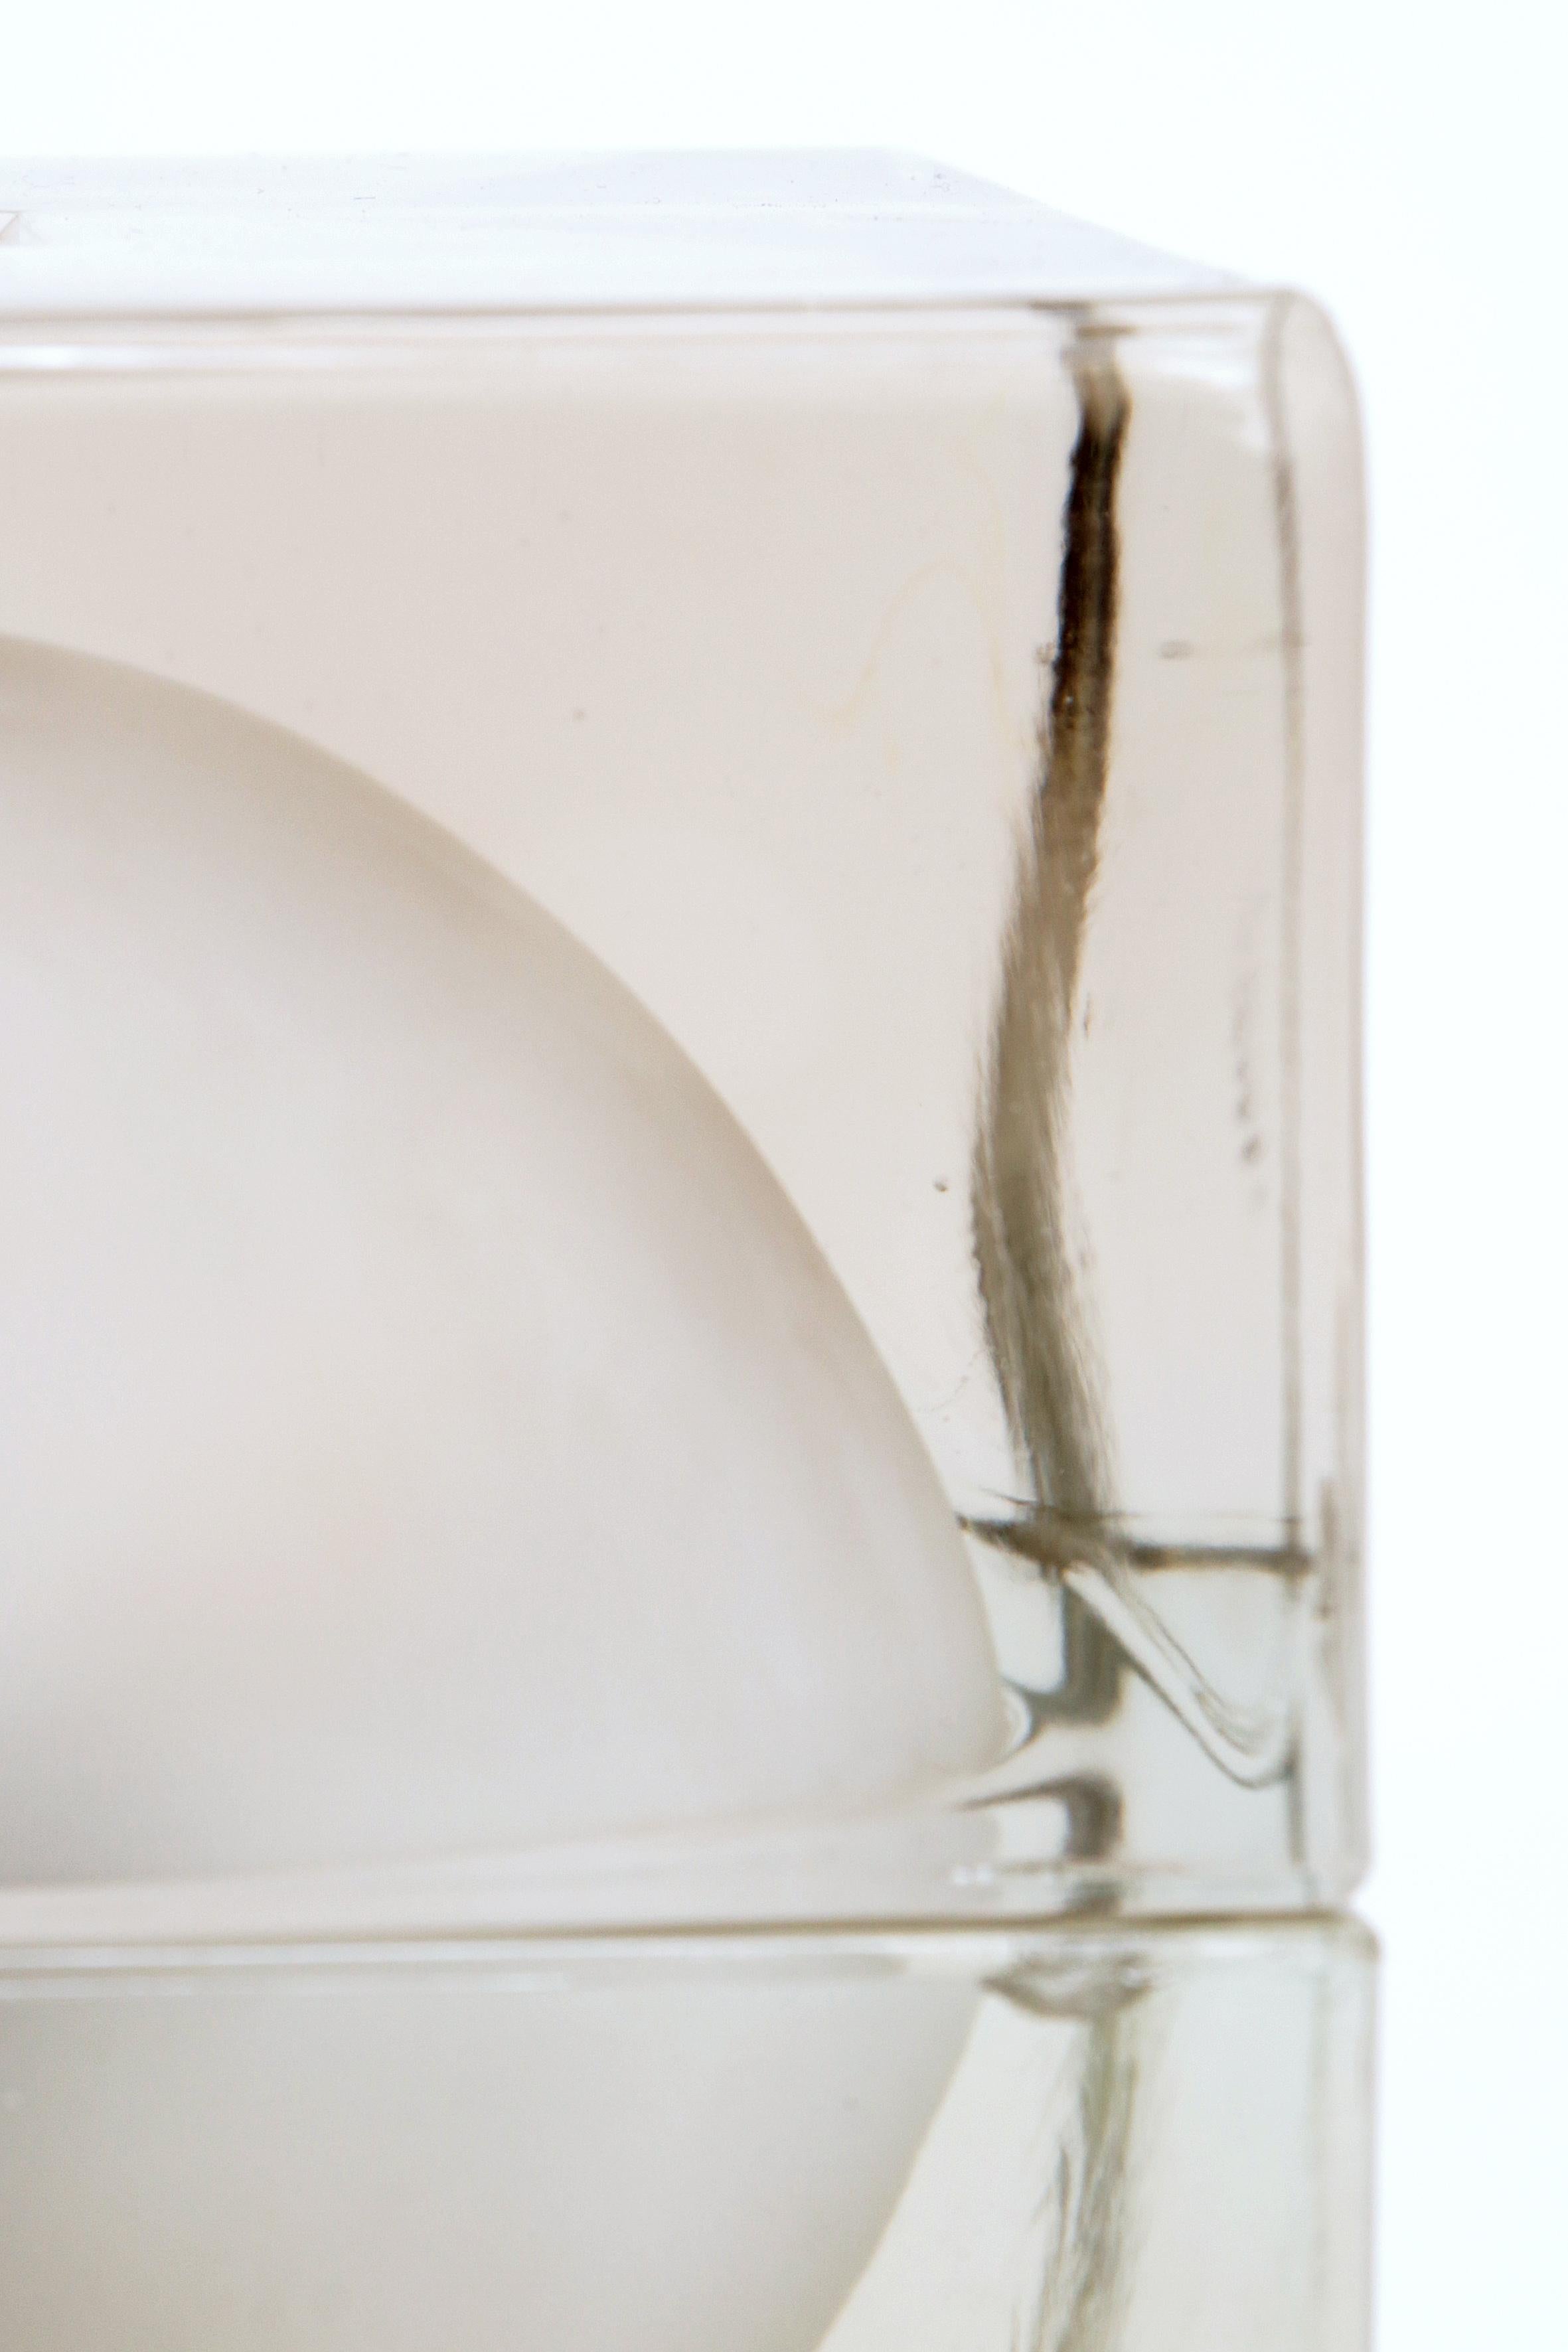 Murano Glass Alessandro Mendini “Cubosfera” Table Lamp Metal Crome Glass 1968 Italy For Sale